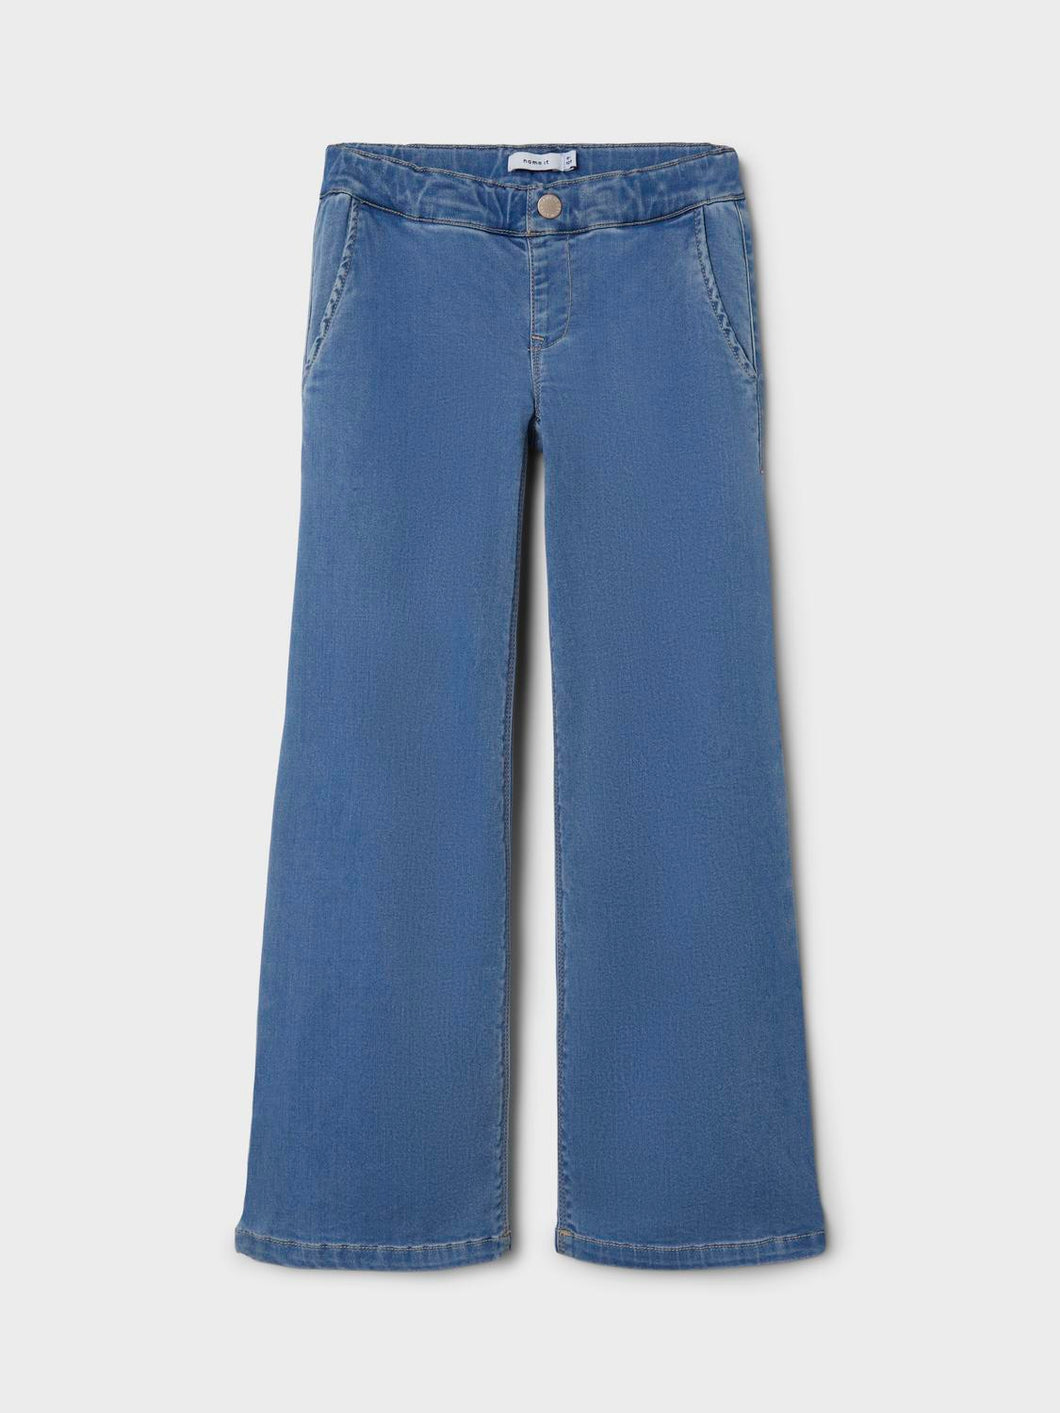 NKFSALLI Jeans - Light Blue Denim